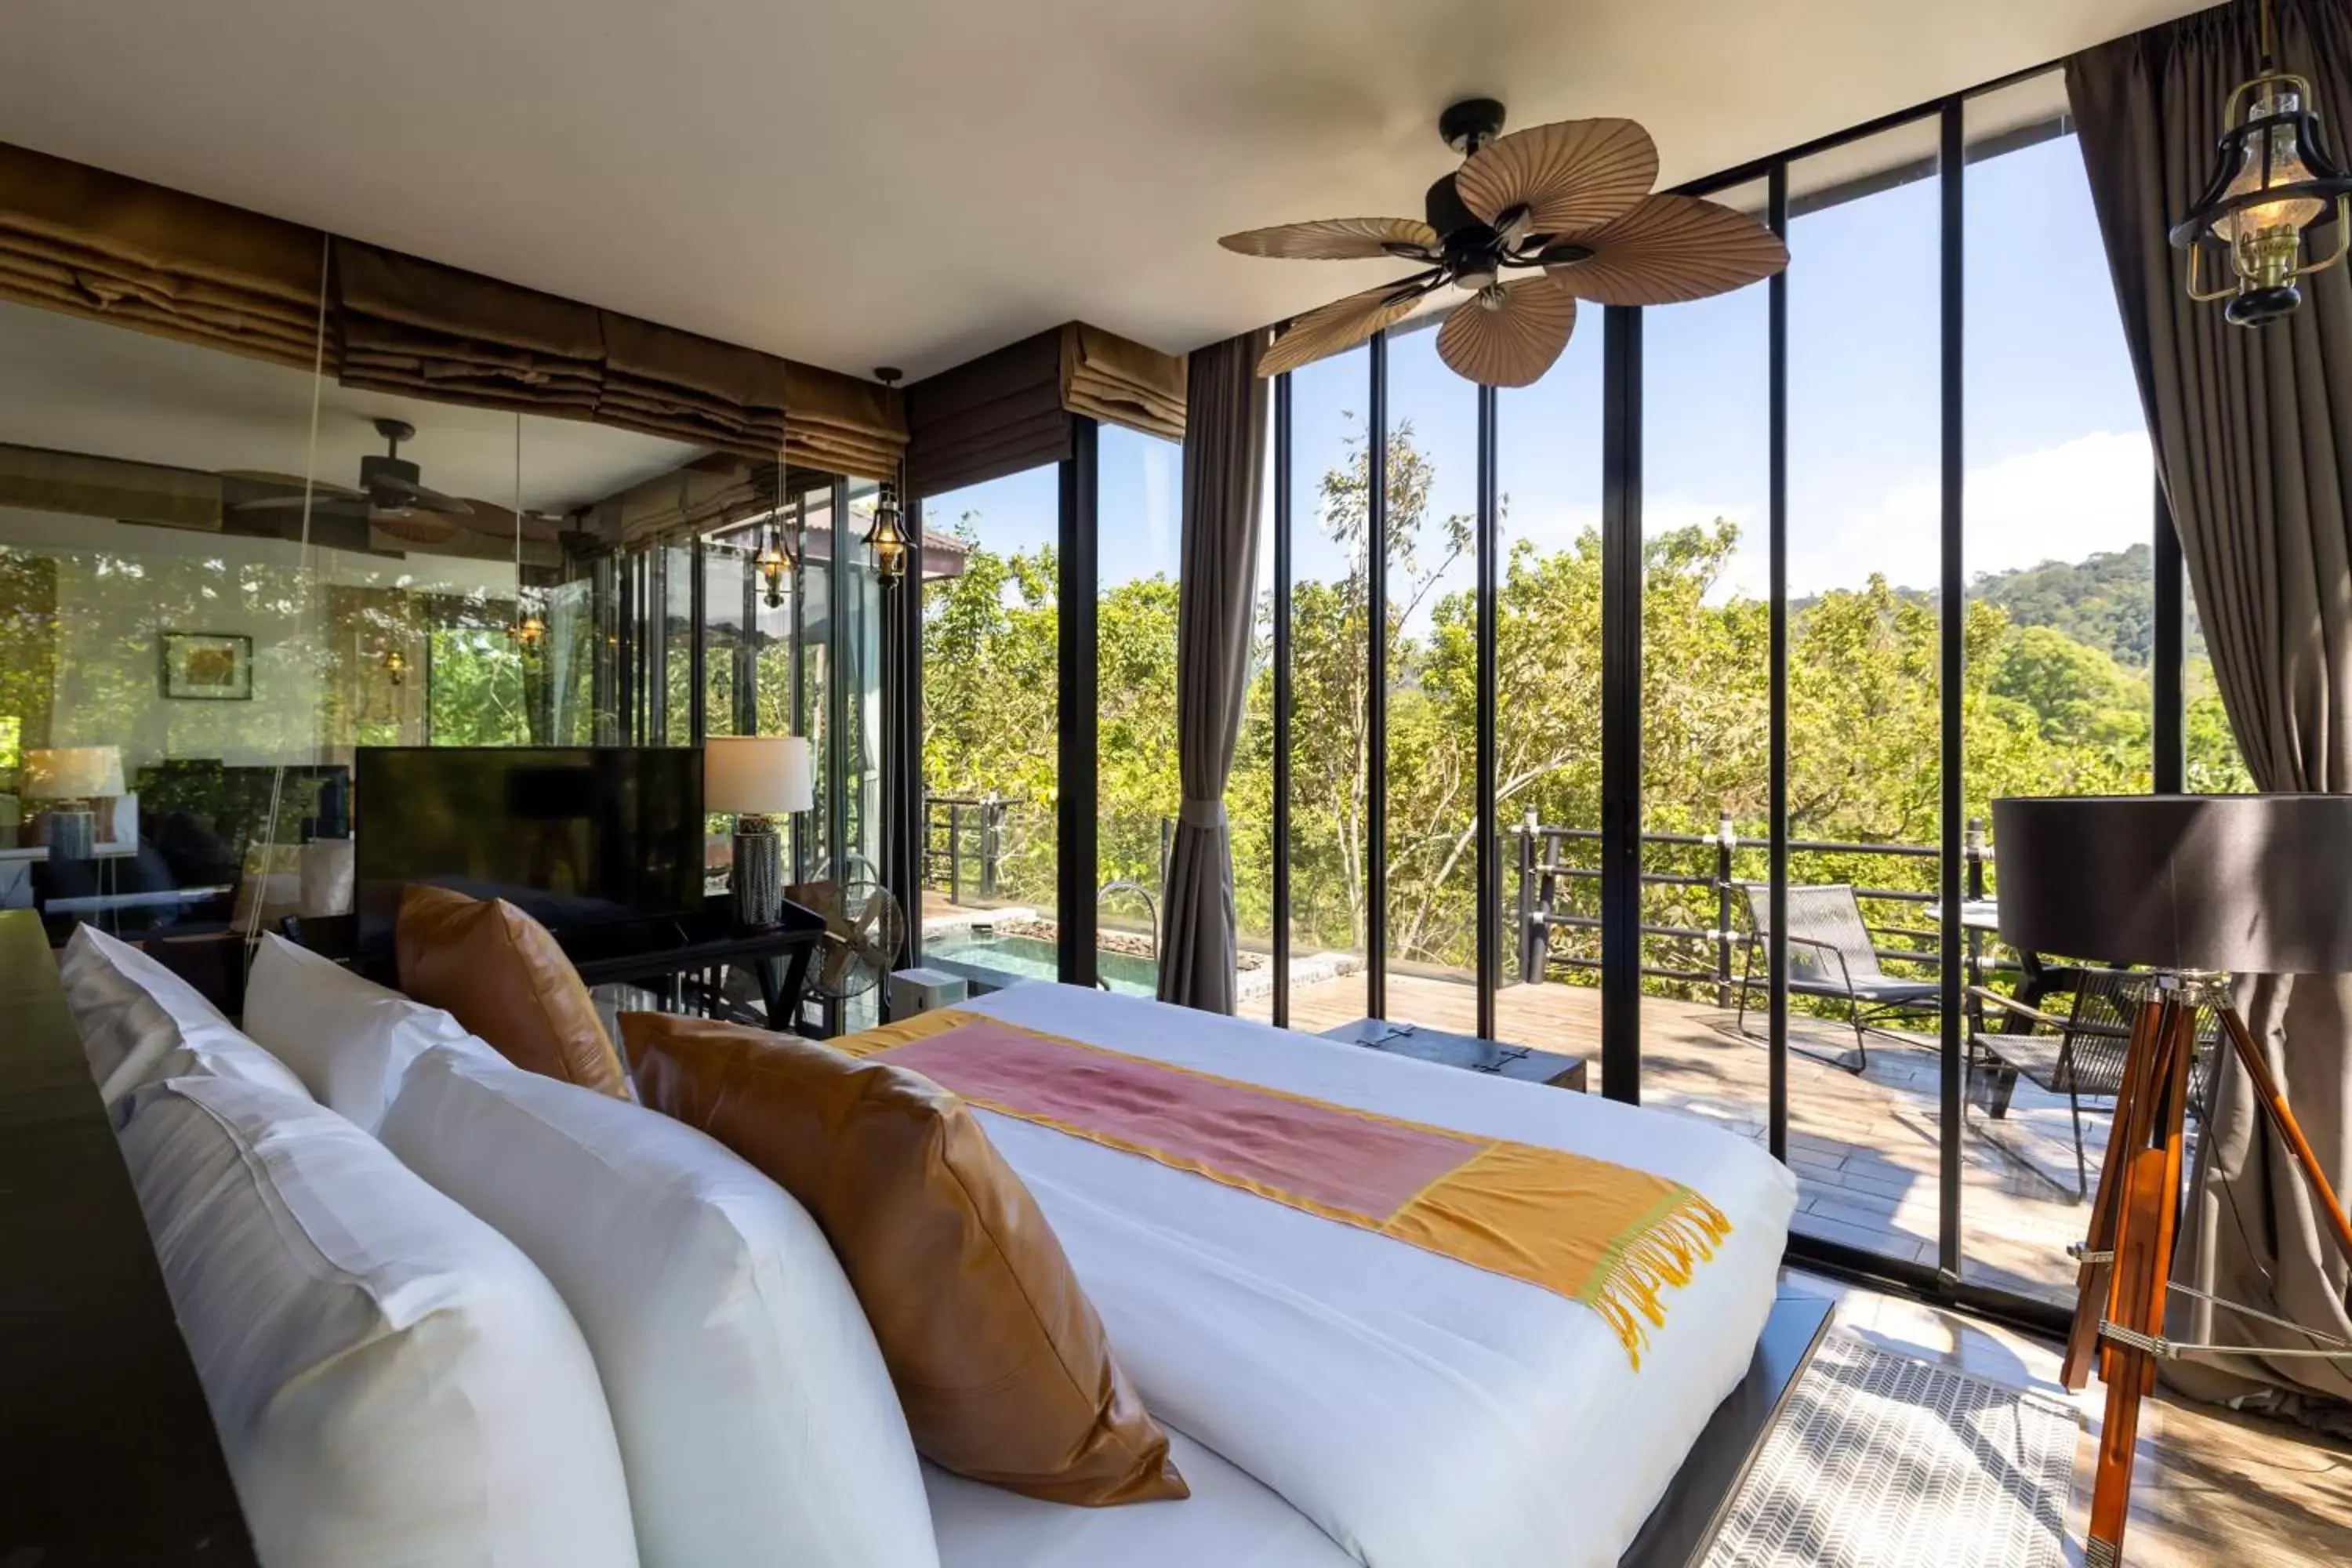 Bedroom in Kachonghills Tented Resort Trang